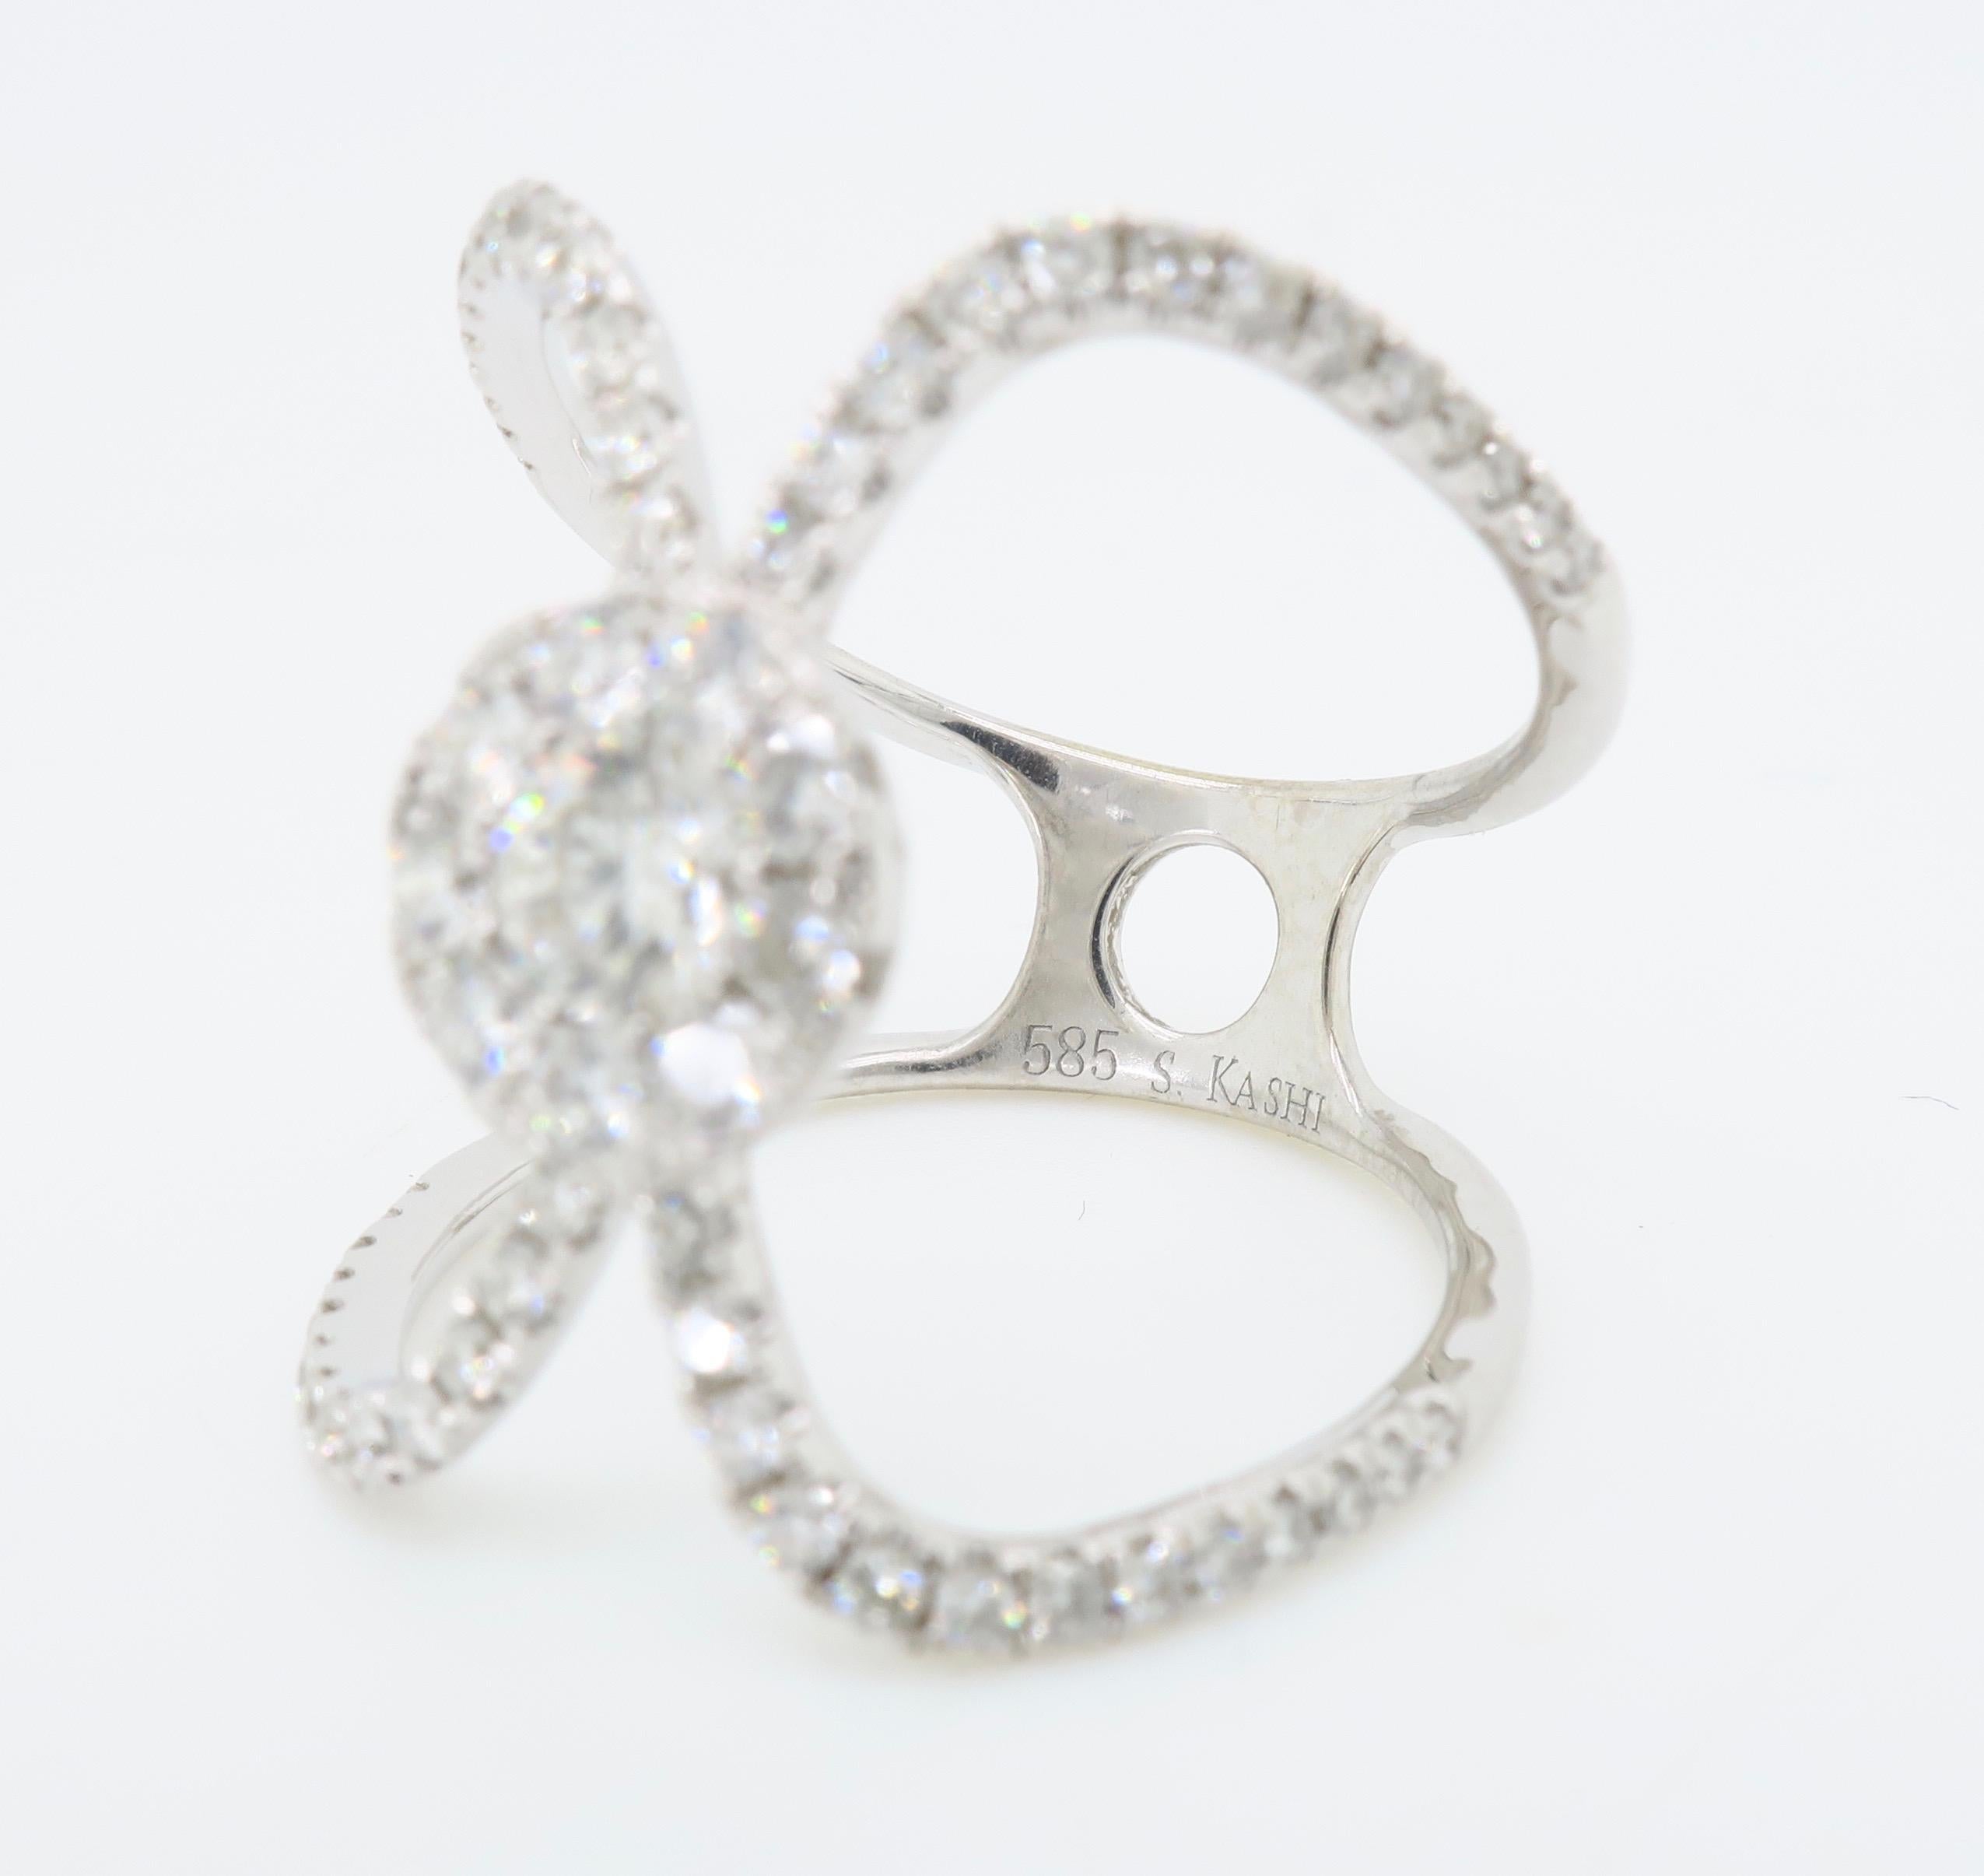 S. Kashi Negative Space Style Diamond Ring 6